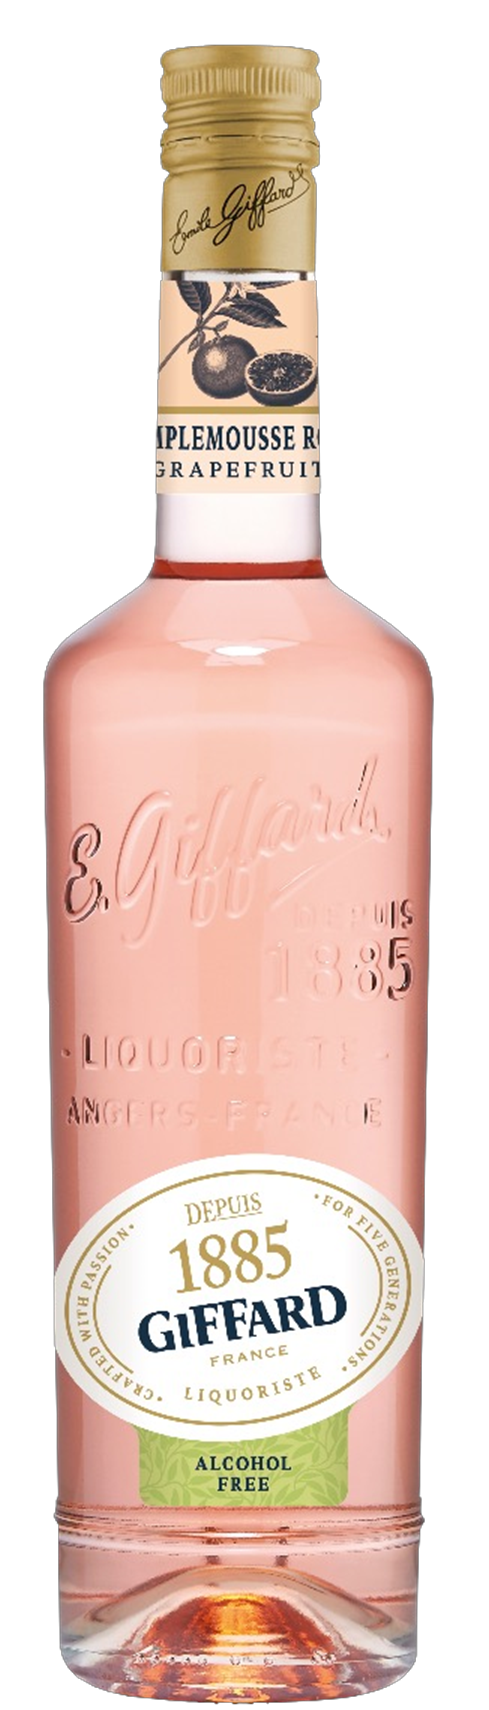 Giffard Alcohol-Free Liqueur - Grapefruit (700ml | Mix & Match Flavours - groups of 6)